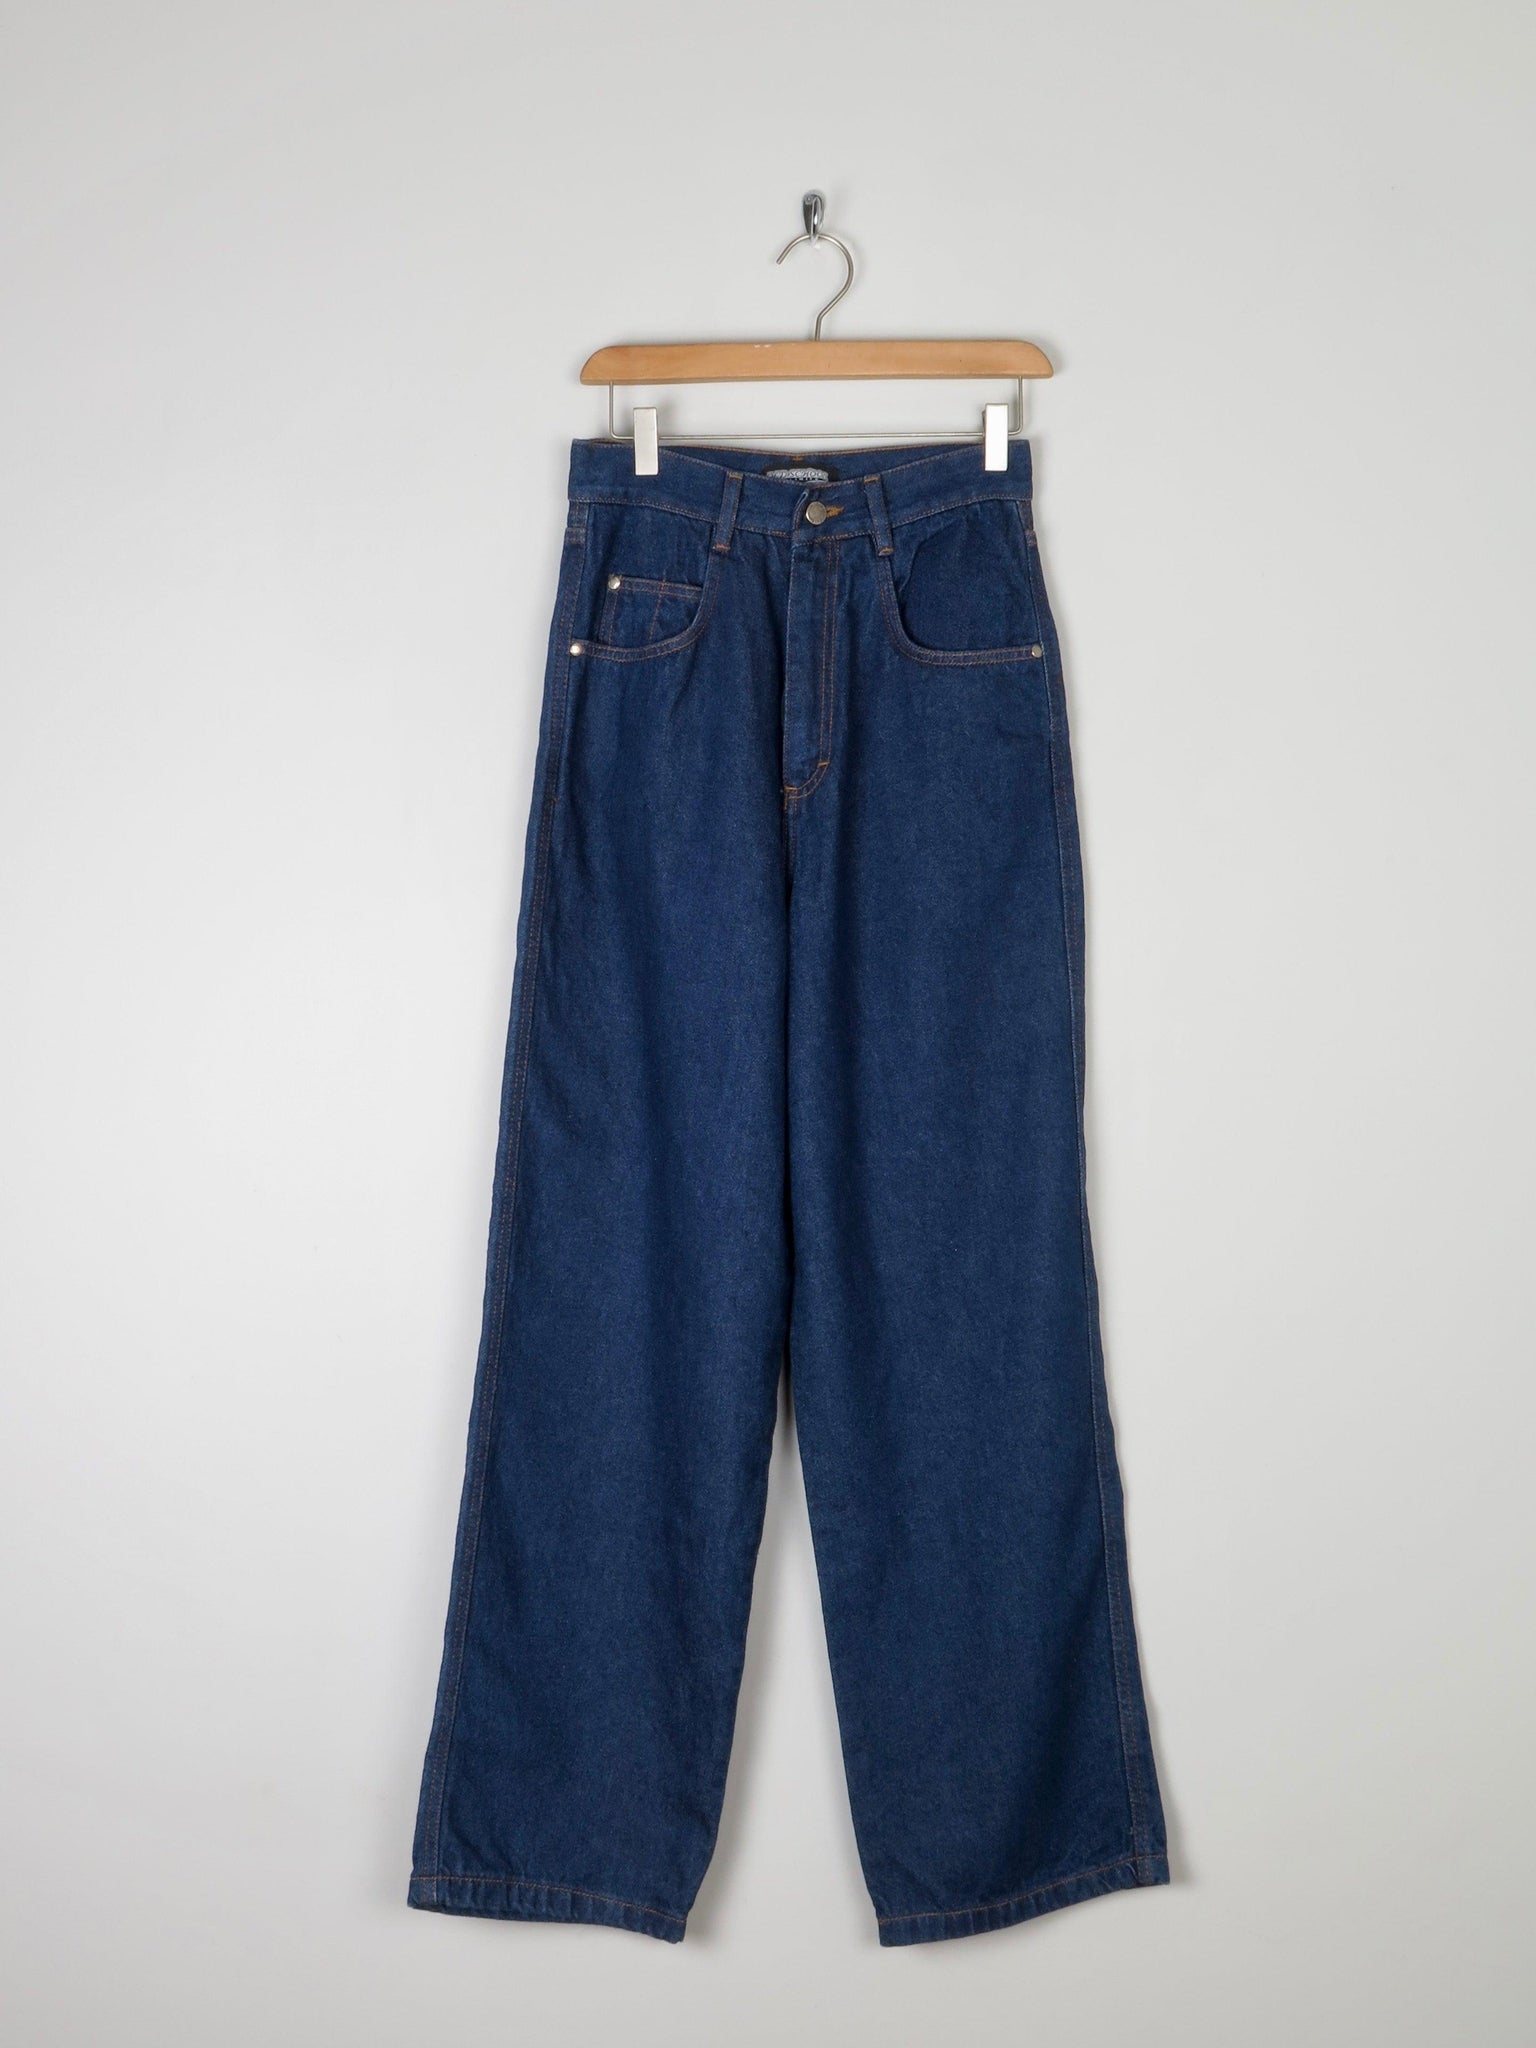 Vintage Indigo 1990s High Waisted Jeans Unworn 26" - The Harlequin